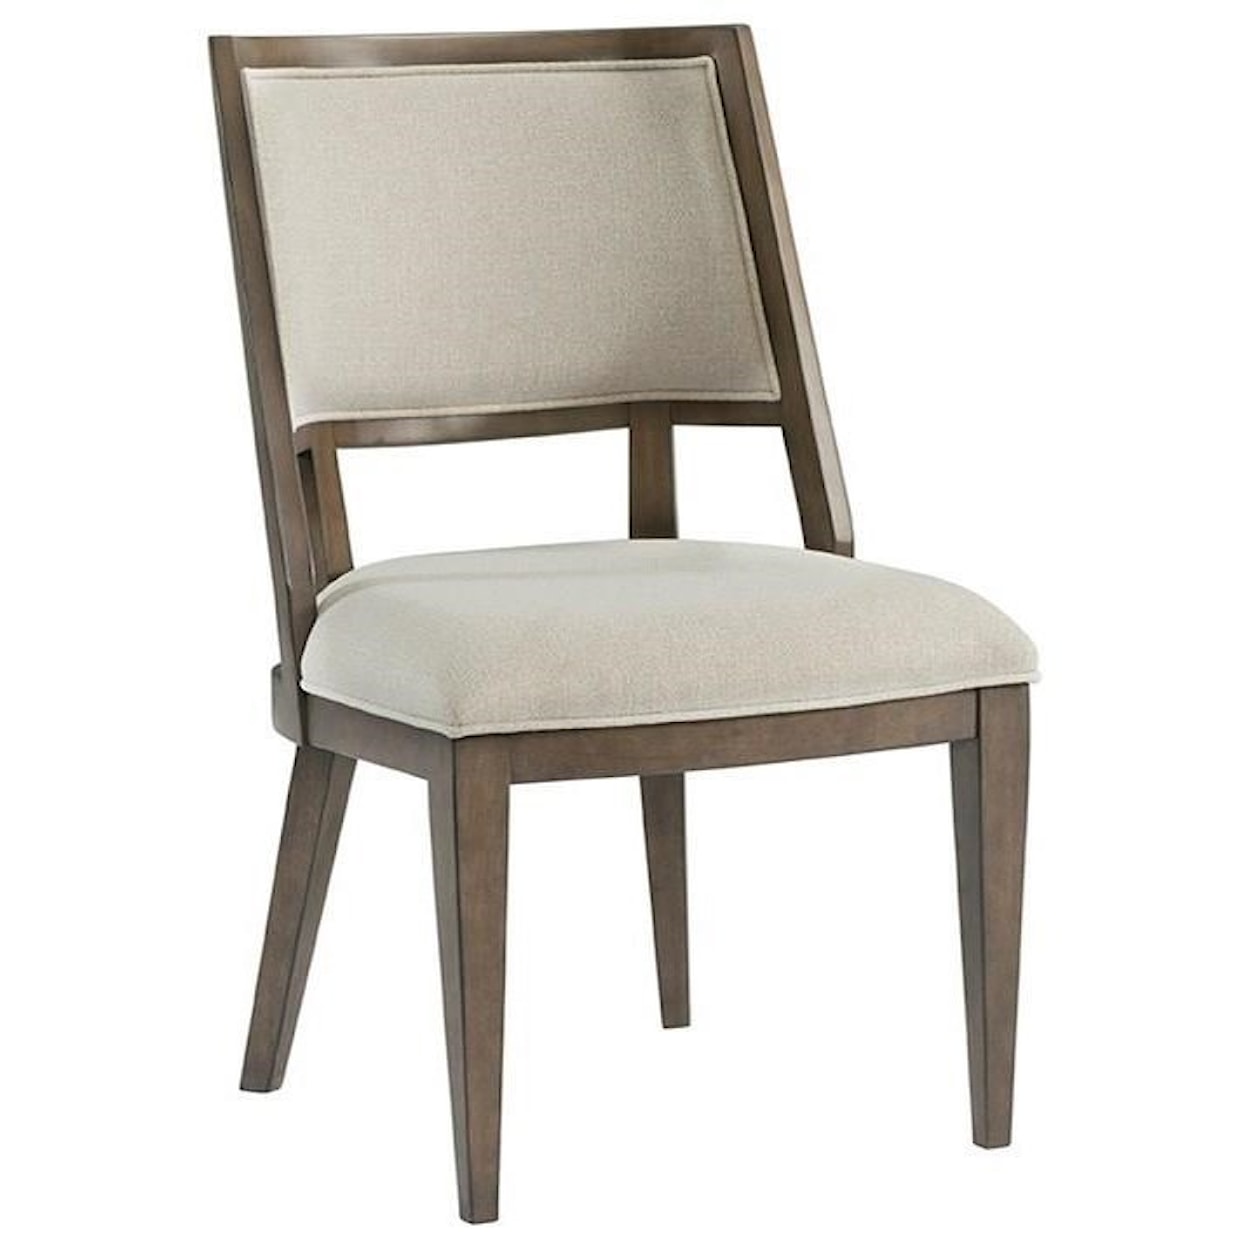 Riverside Furniture Monterey Upholstered Hostess Chair